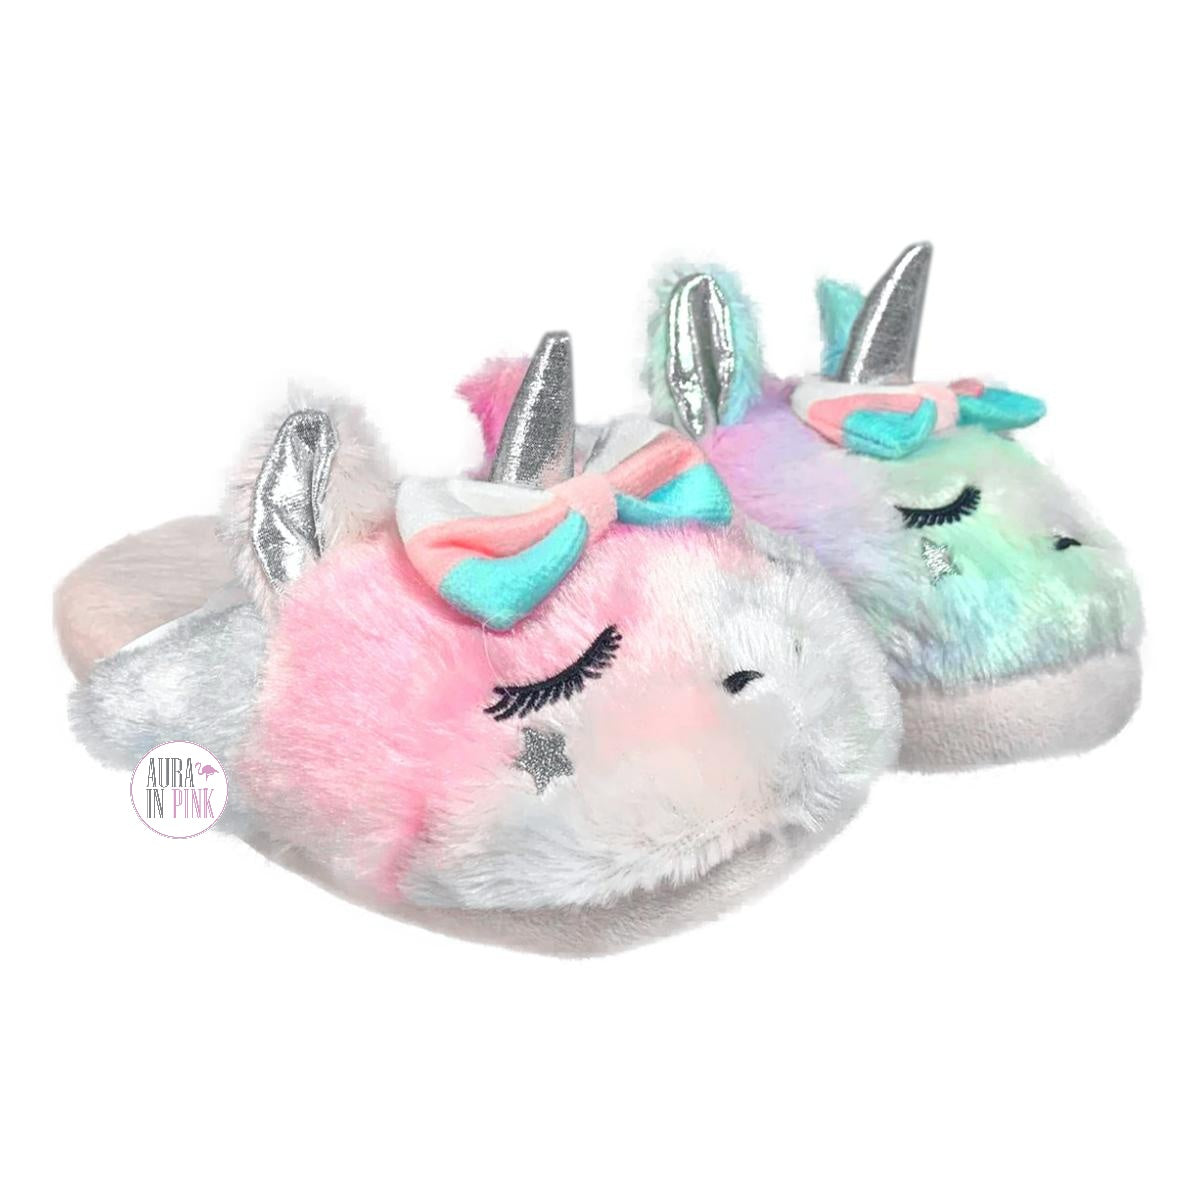 UnderOneSky Pastel Rainbow Faux Fur Plush Unicorn Slippers - Assorted Aura Pink